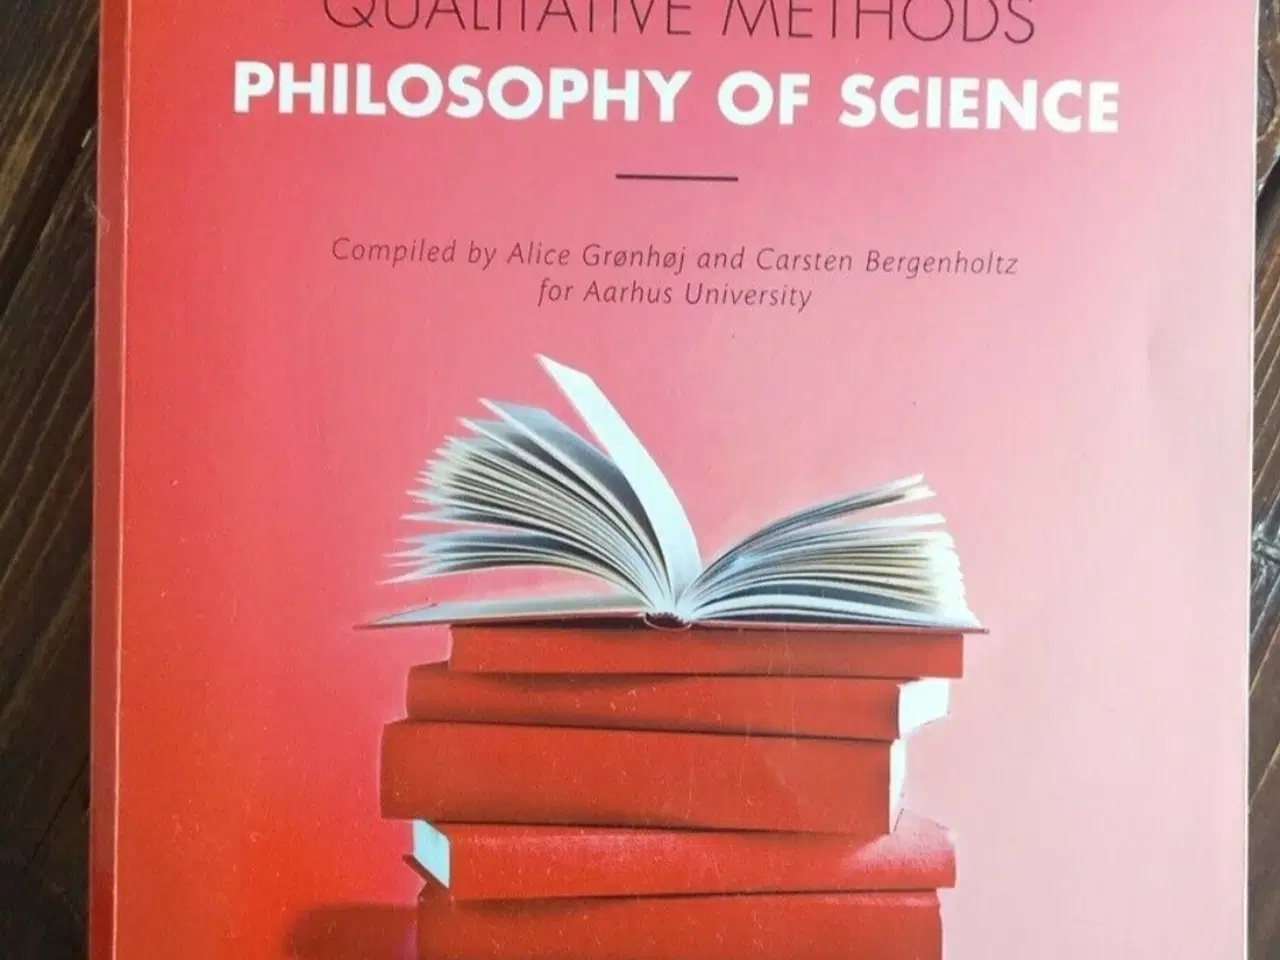 Billede 1 - Qualitative Methods Philosophy of science